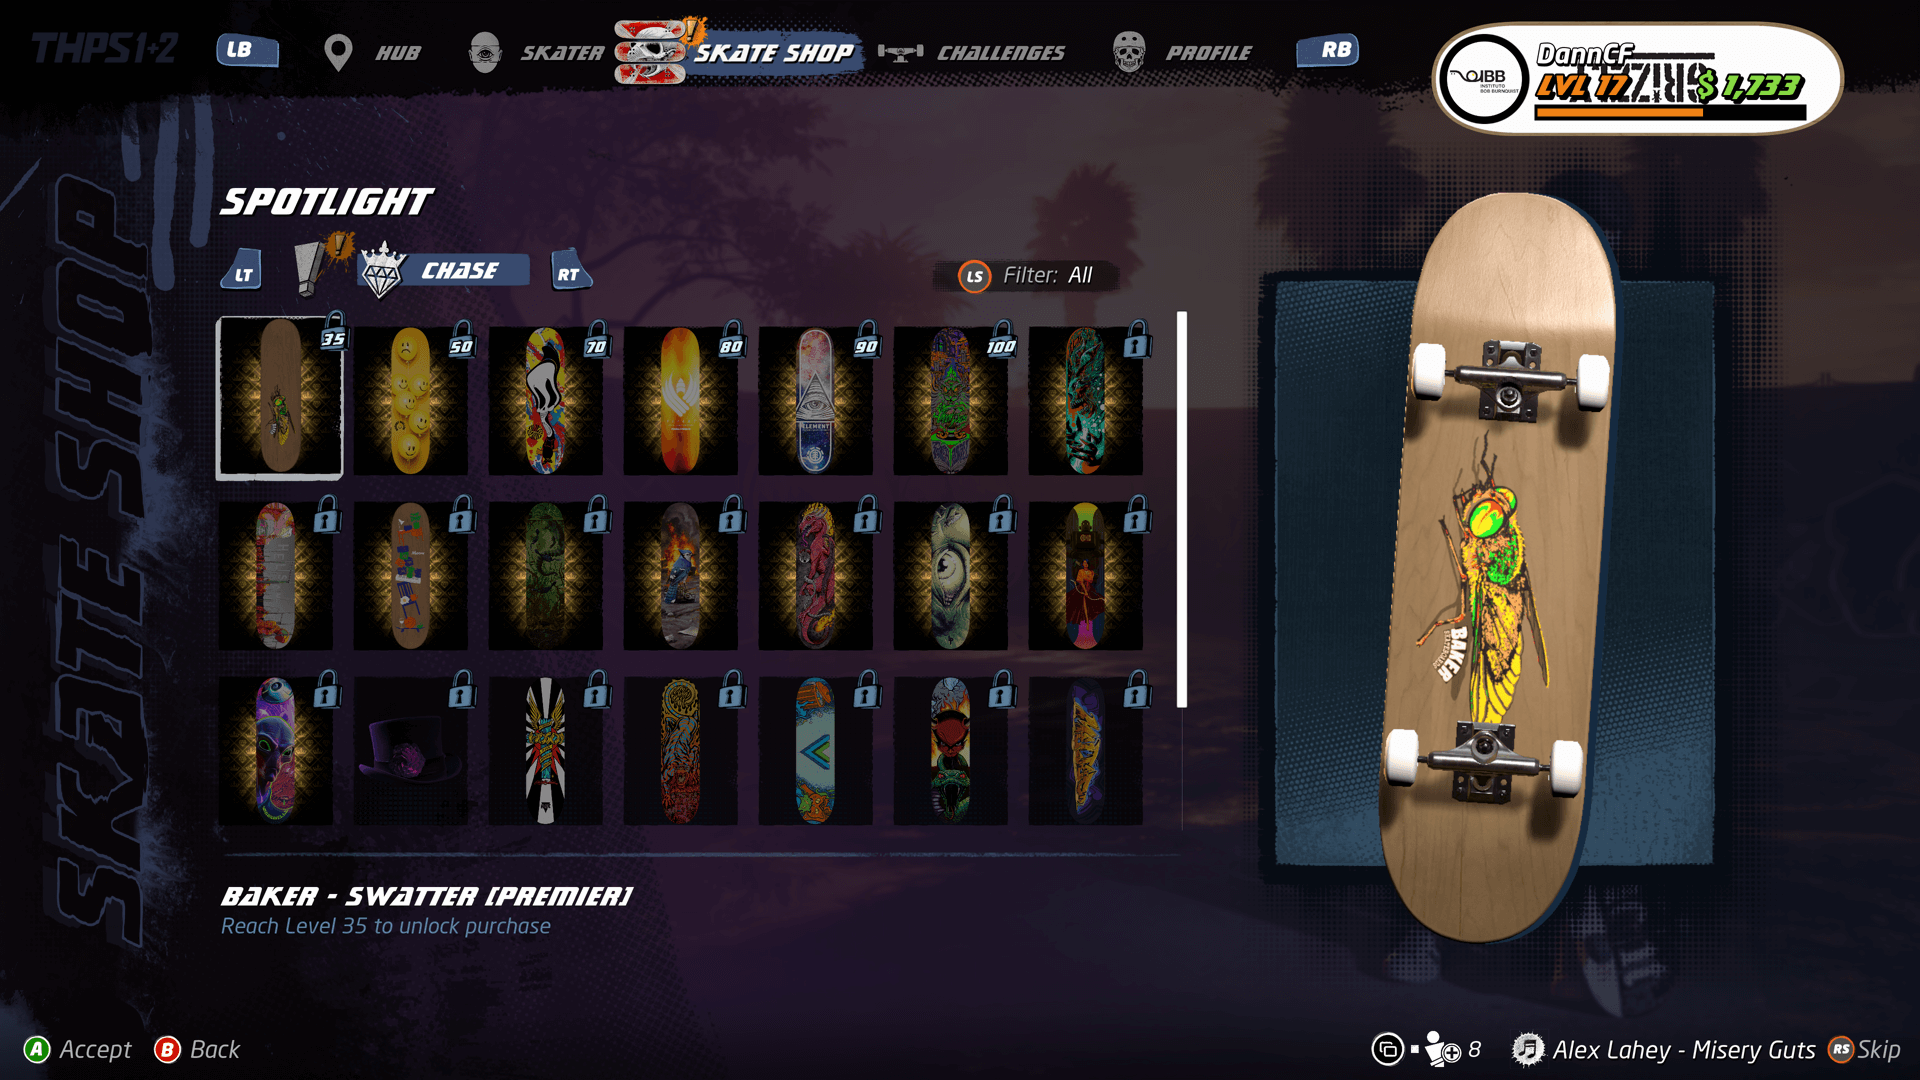 Store locked items screenshot of Tony Hawk’s Pro Skater 1 + 2 video game interface.